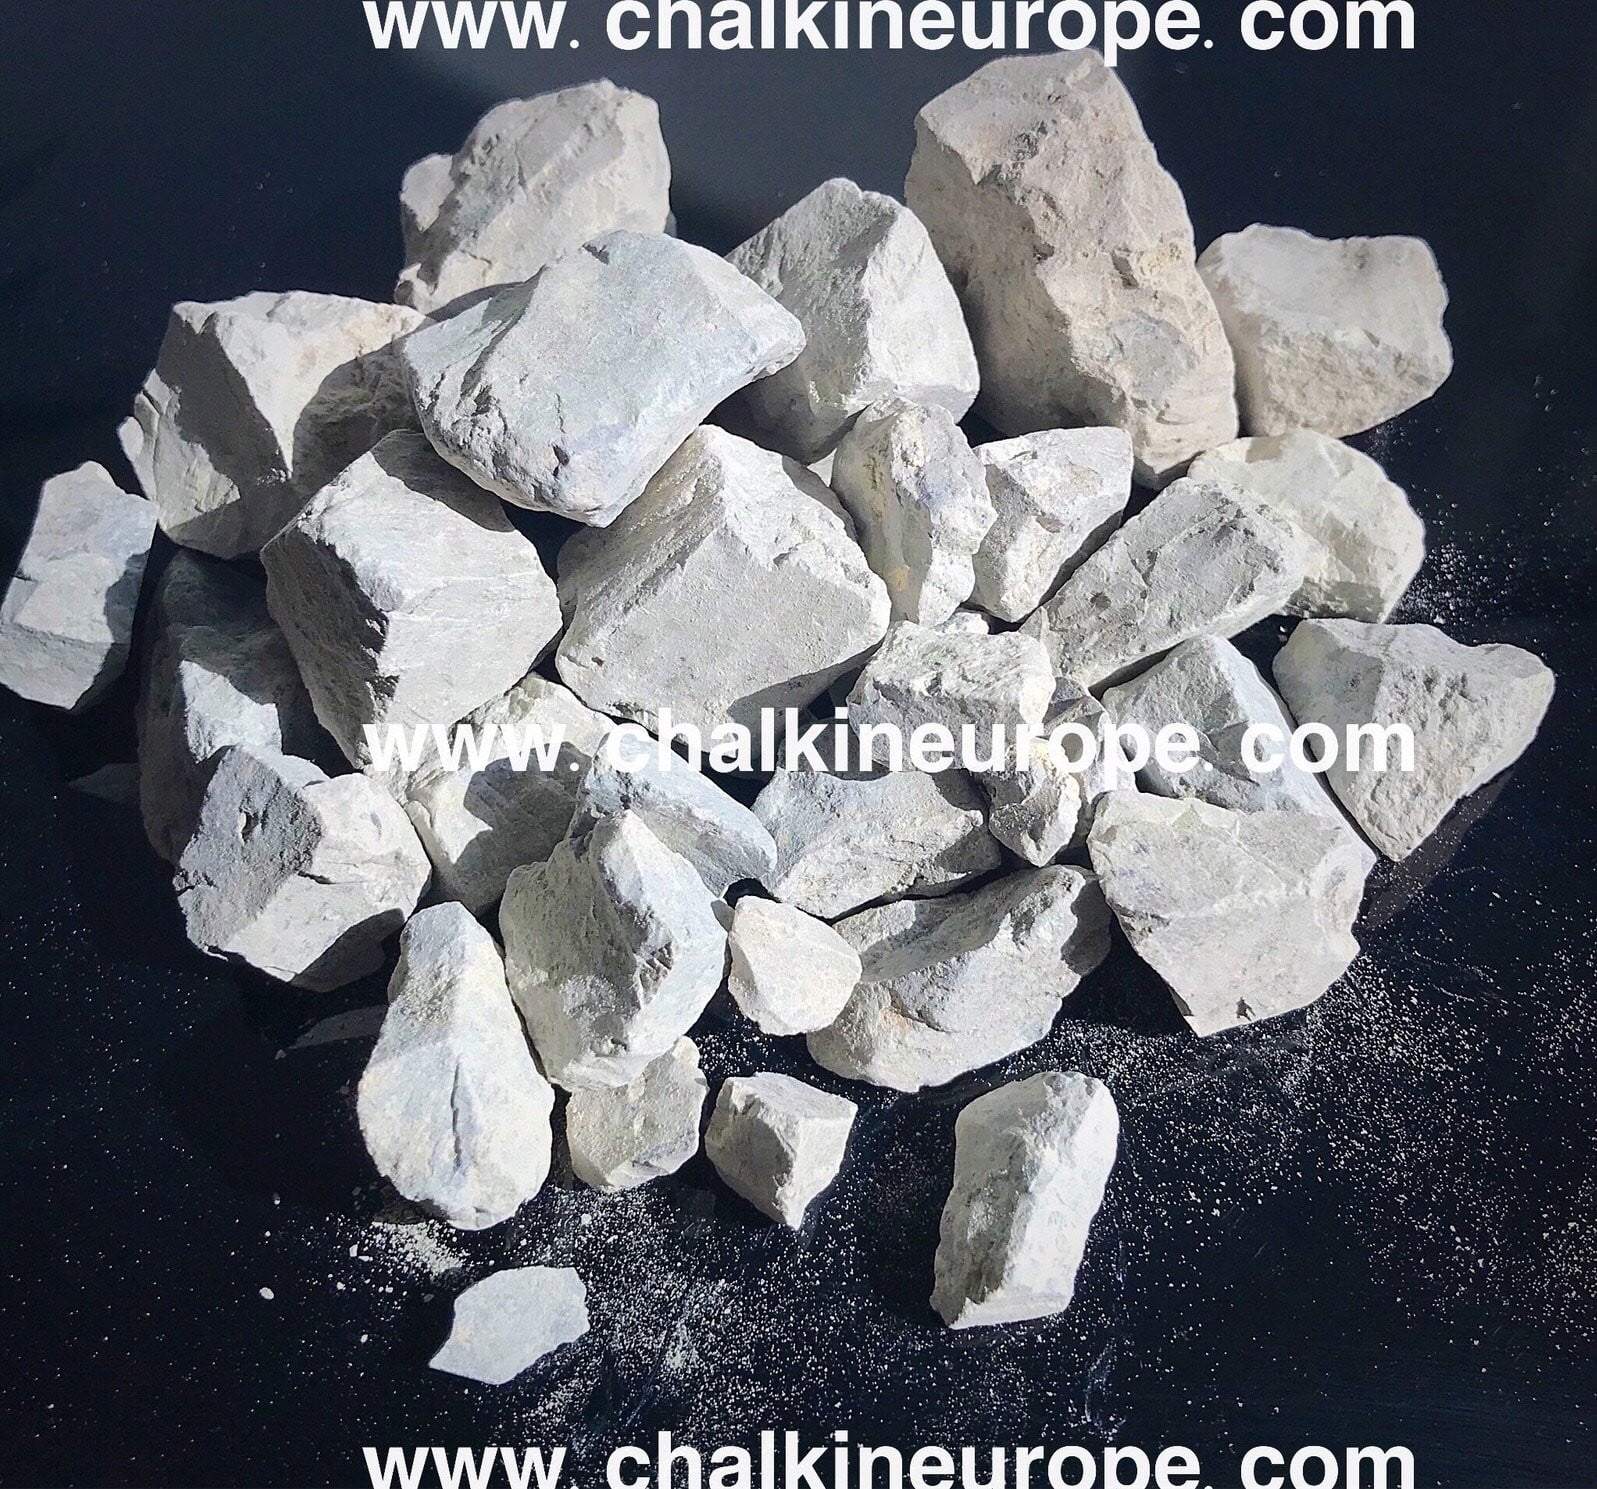 Grey / Grey Asian Clay - Chalkineurope